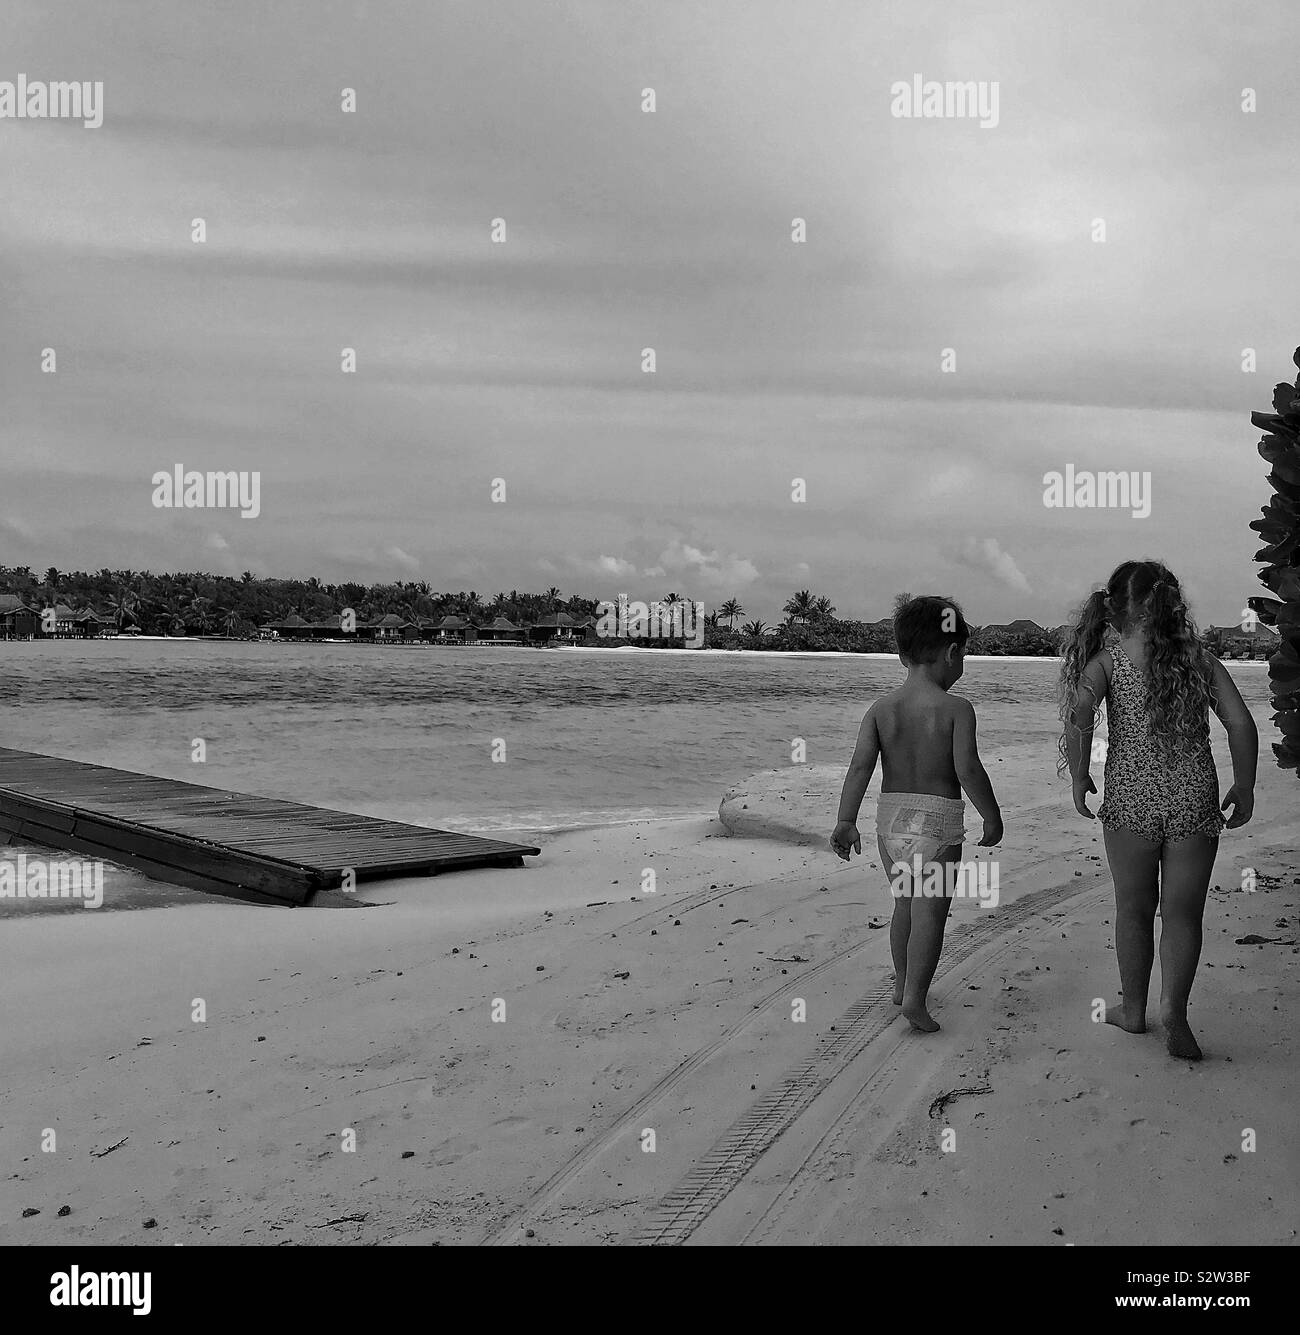 Children walking on the beach Stock Photo - Alamy